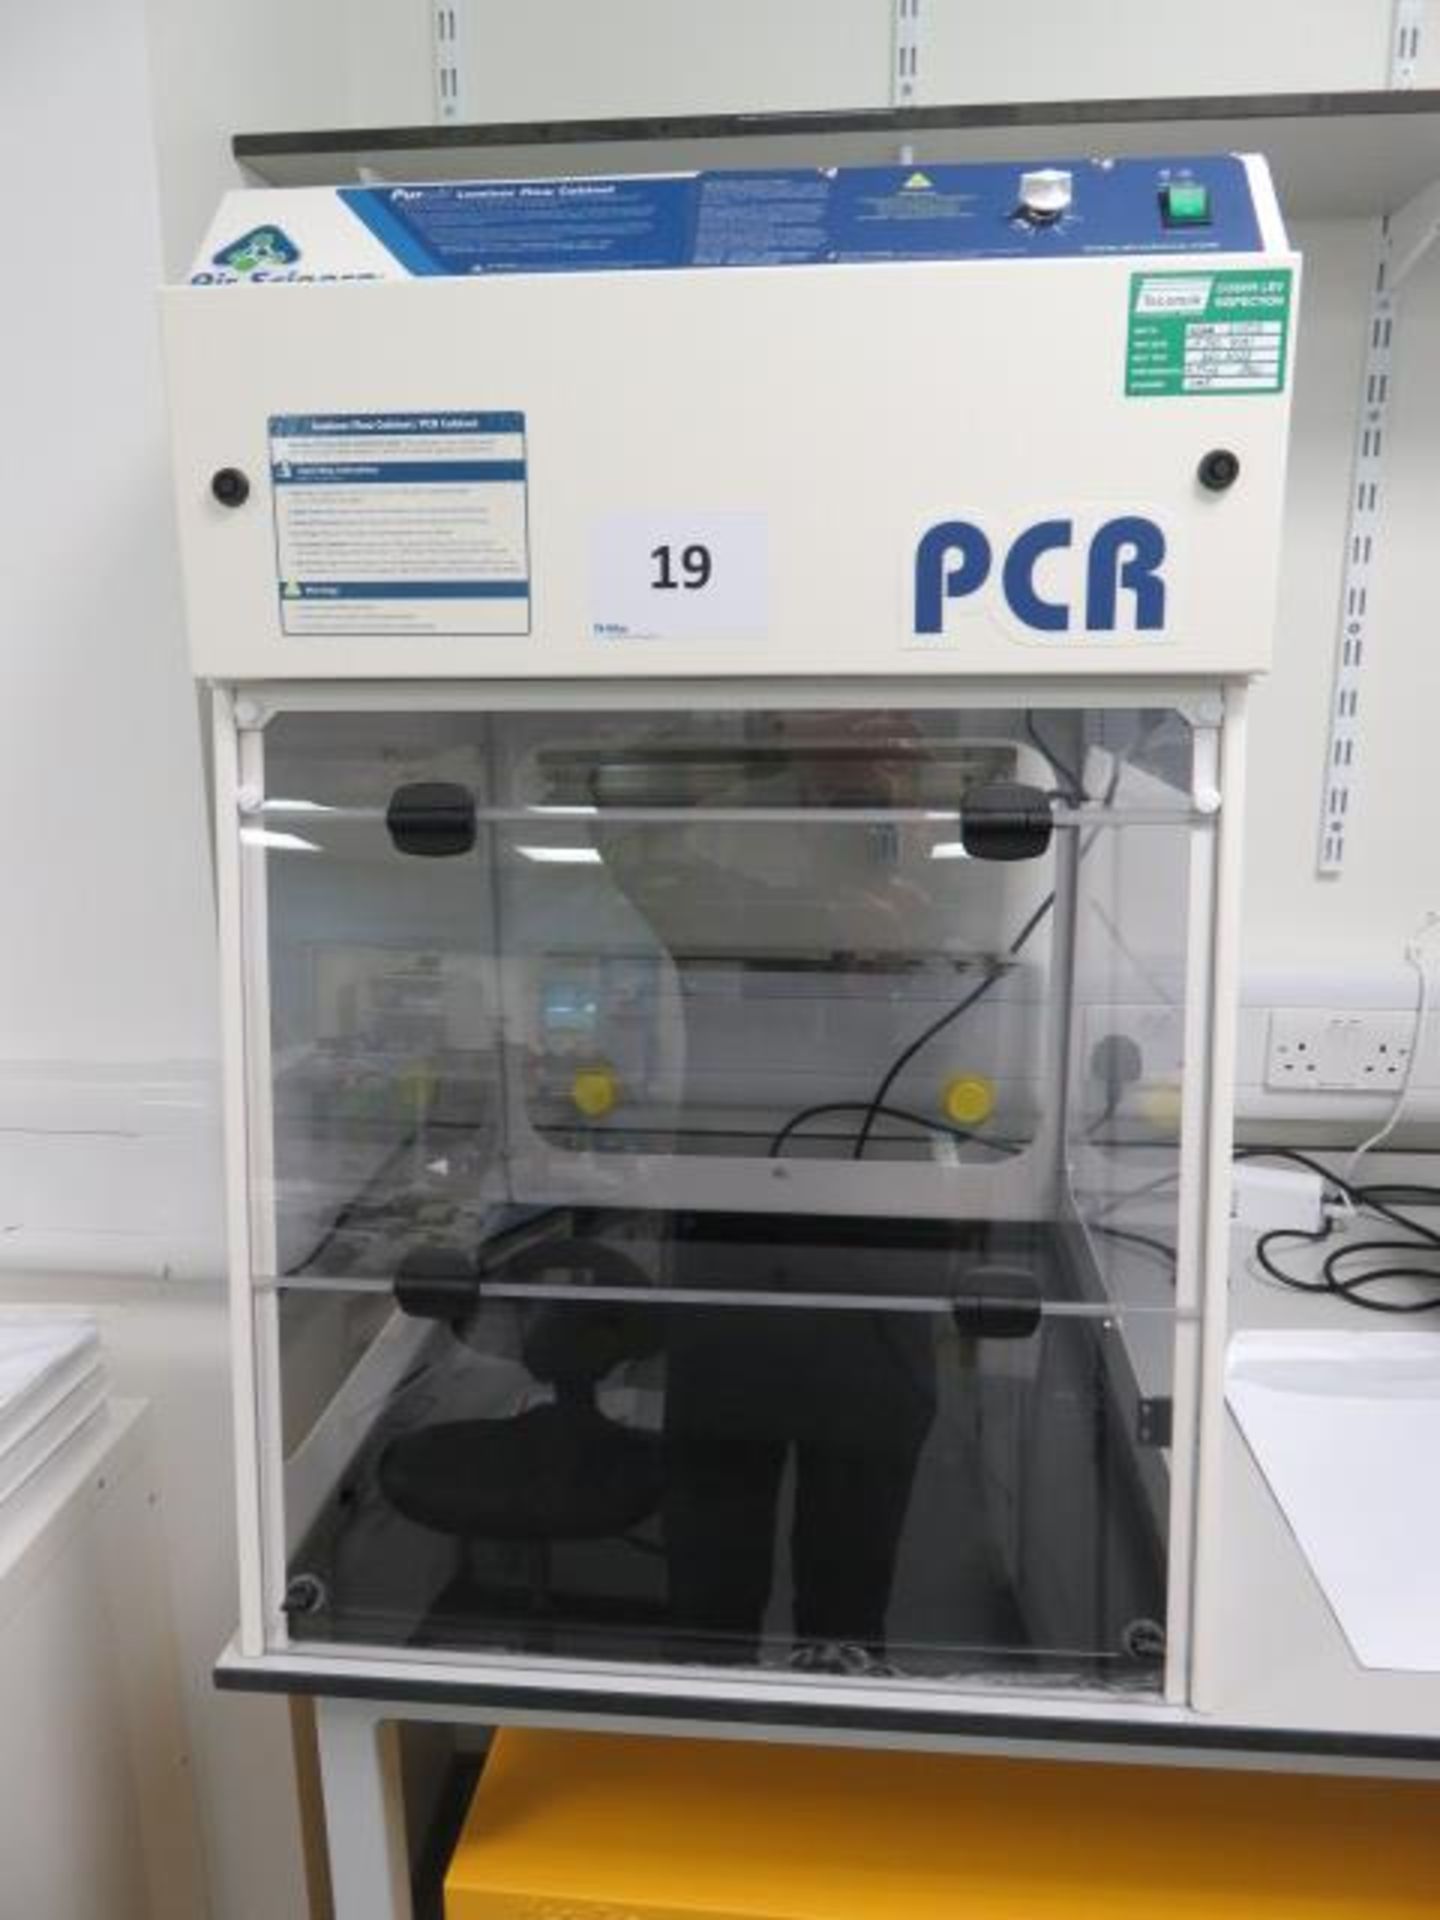 Puair Model PCR-24 60cm width Bench-Top Laminar Flow Cabinet. Serial No. PCR94431